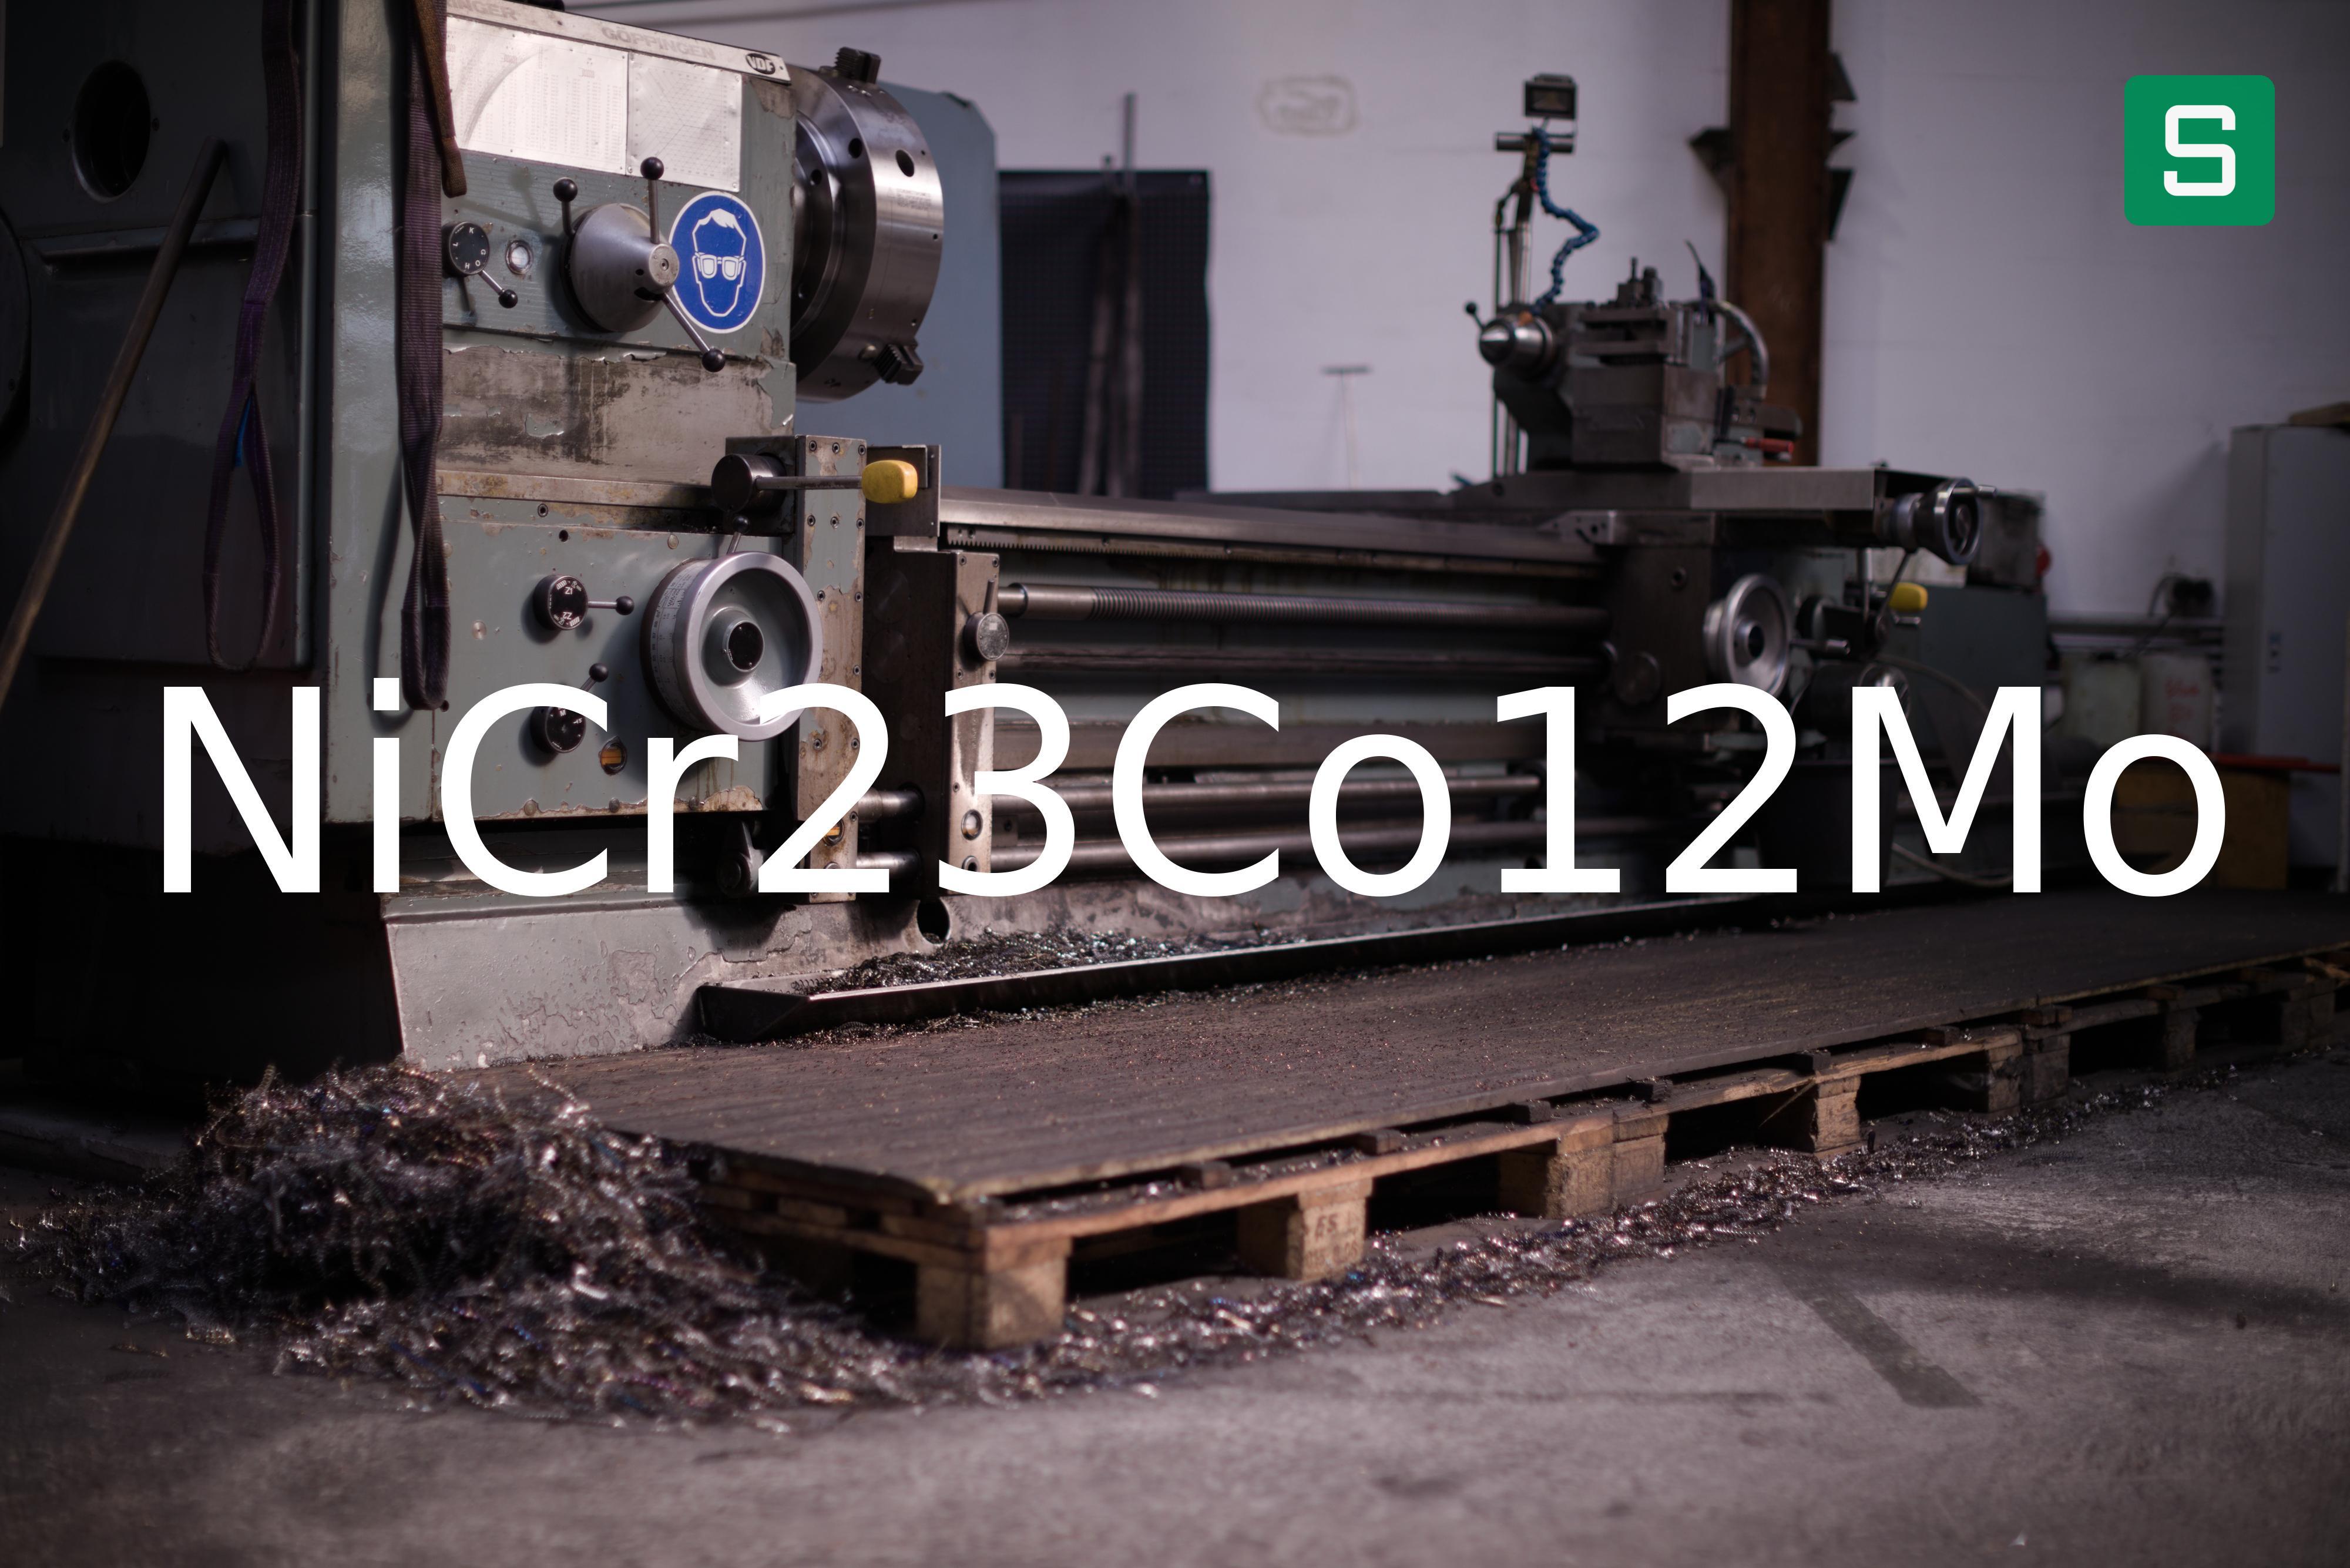 Steel Material: NiCr23Co12Mo